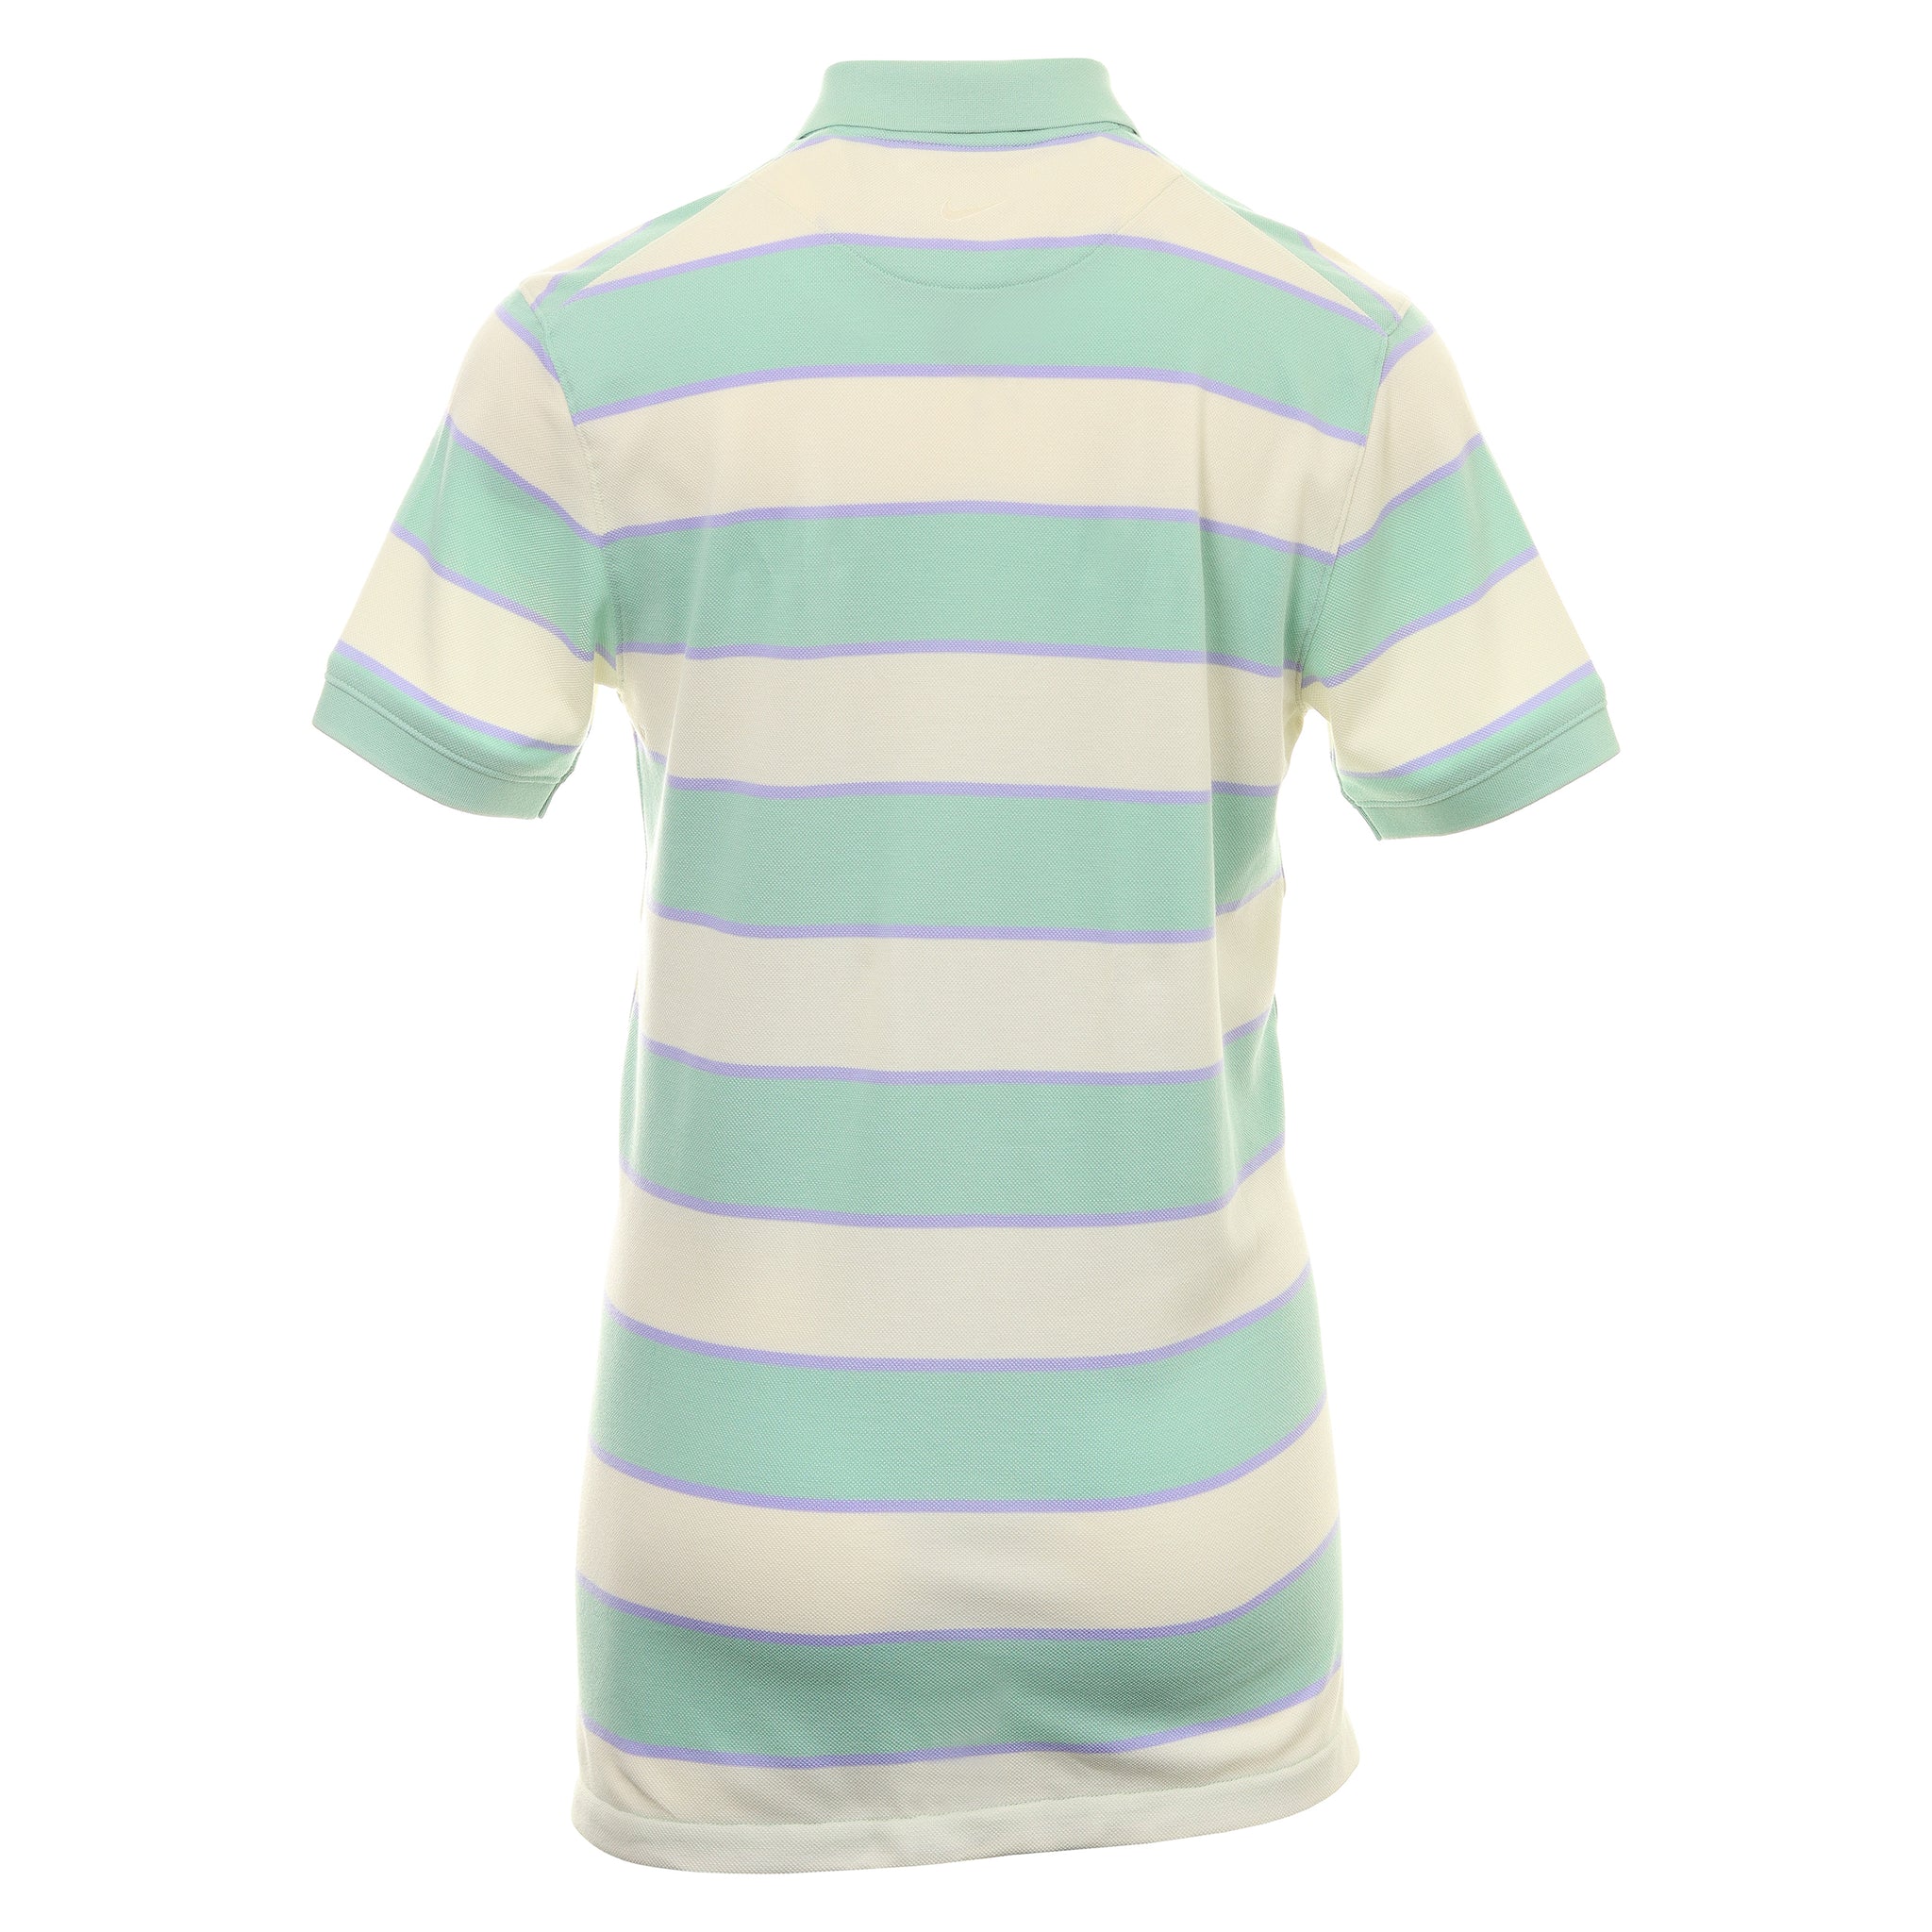 nike-golf-the-rugby-stripe-polo-shirt-dh0903-308-enamel-green